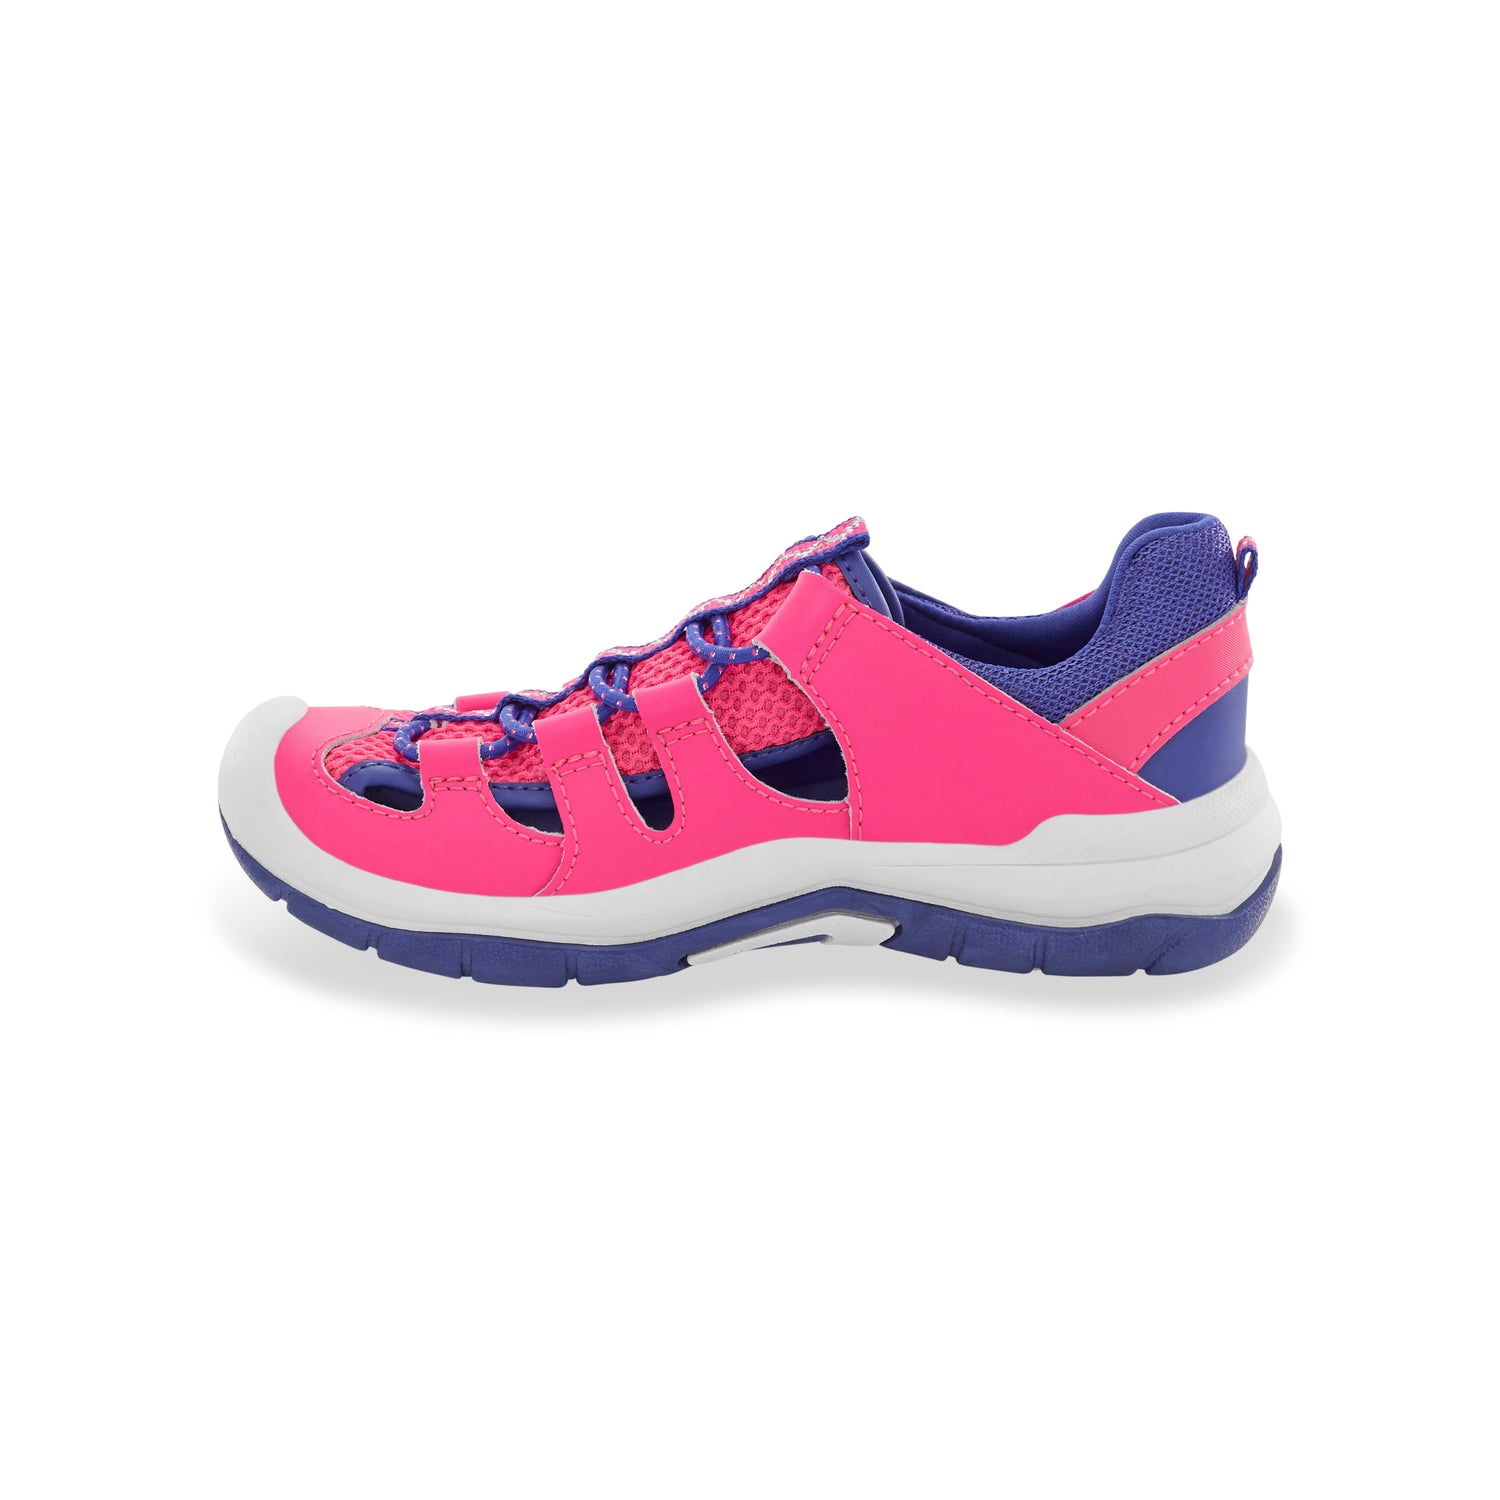 Wade 2.0 Sneaker Sandal Hot Pink